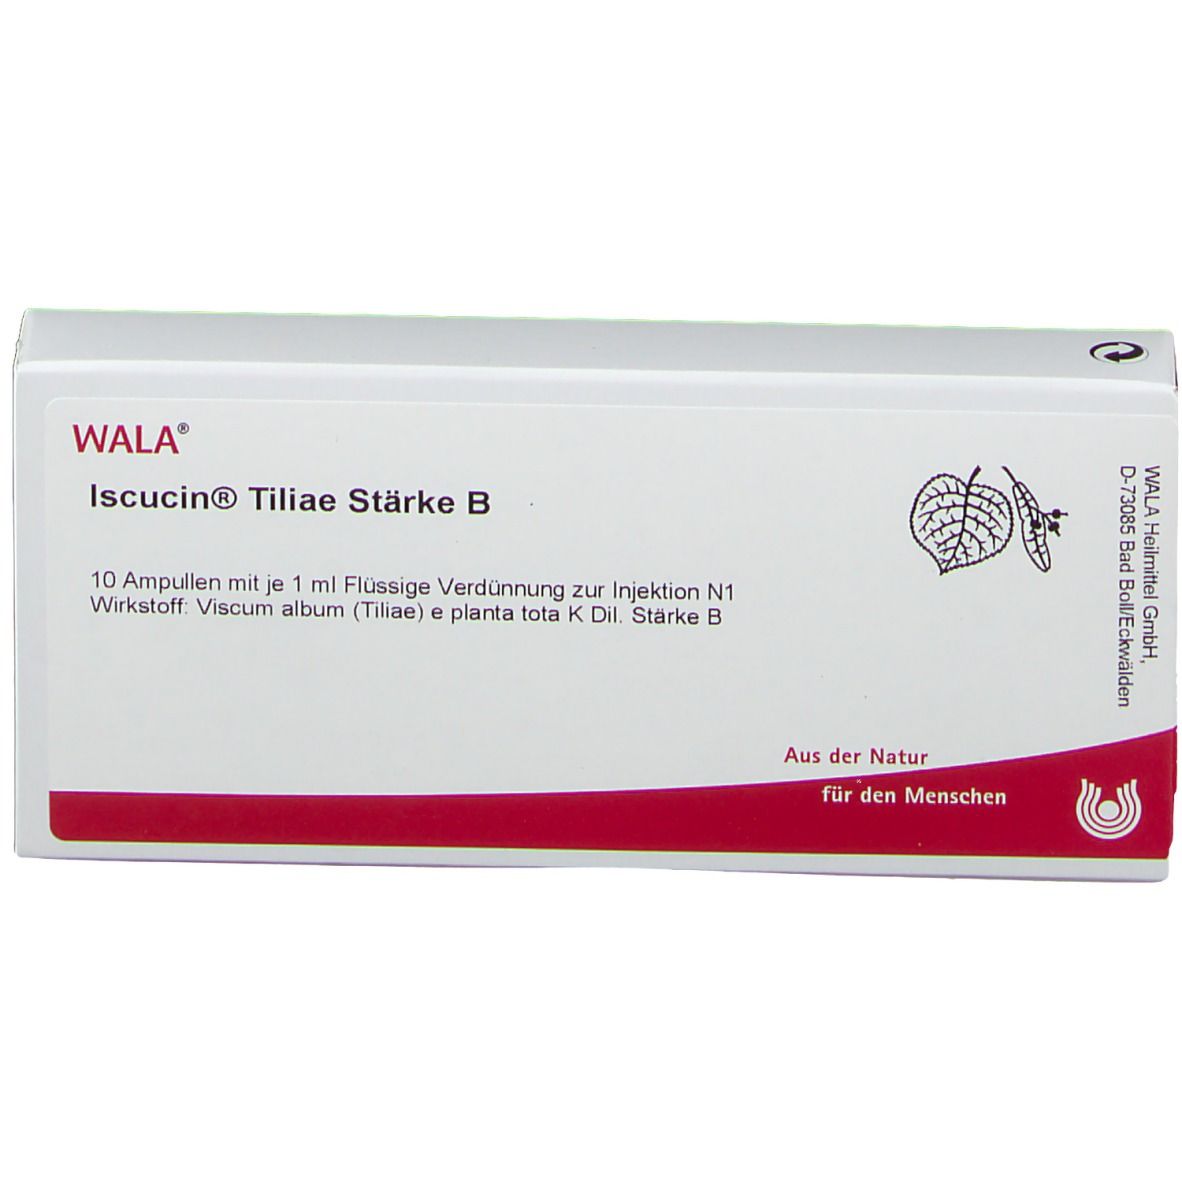 WALA® Iscucin Tiliae St.B Amp.